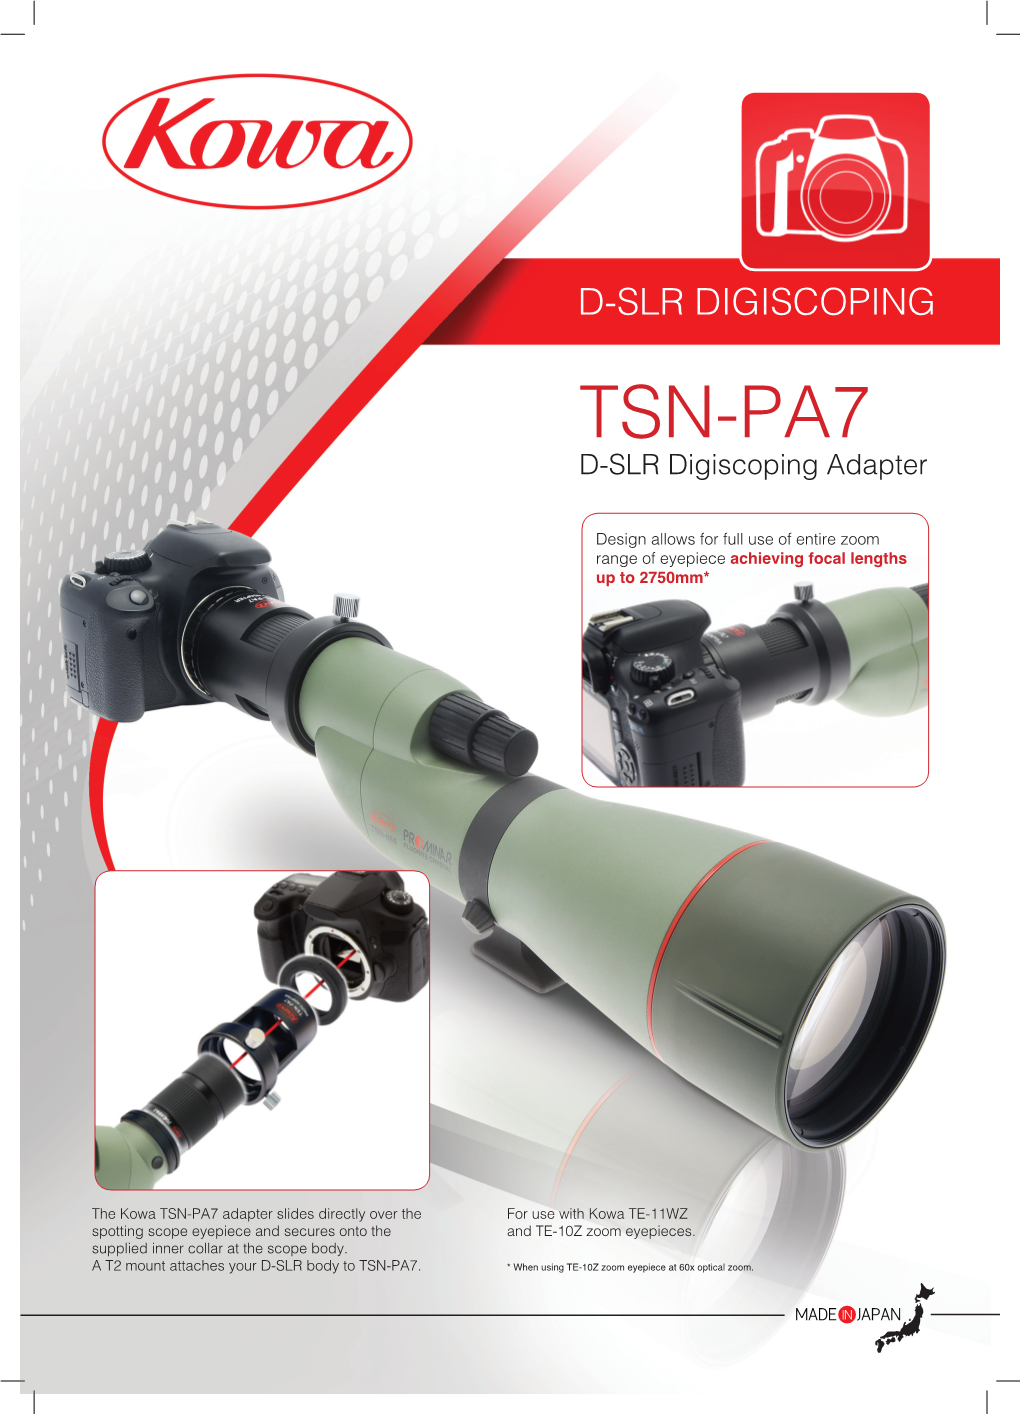 TSN-PA7 D-SLR Digiscoping Adapter